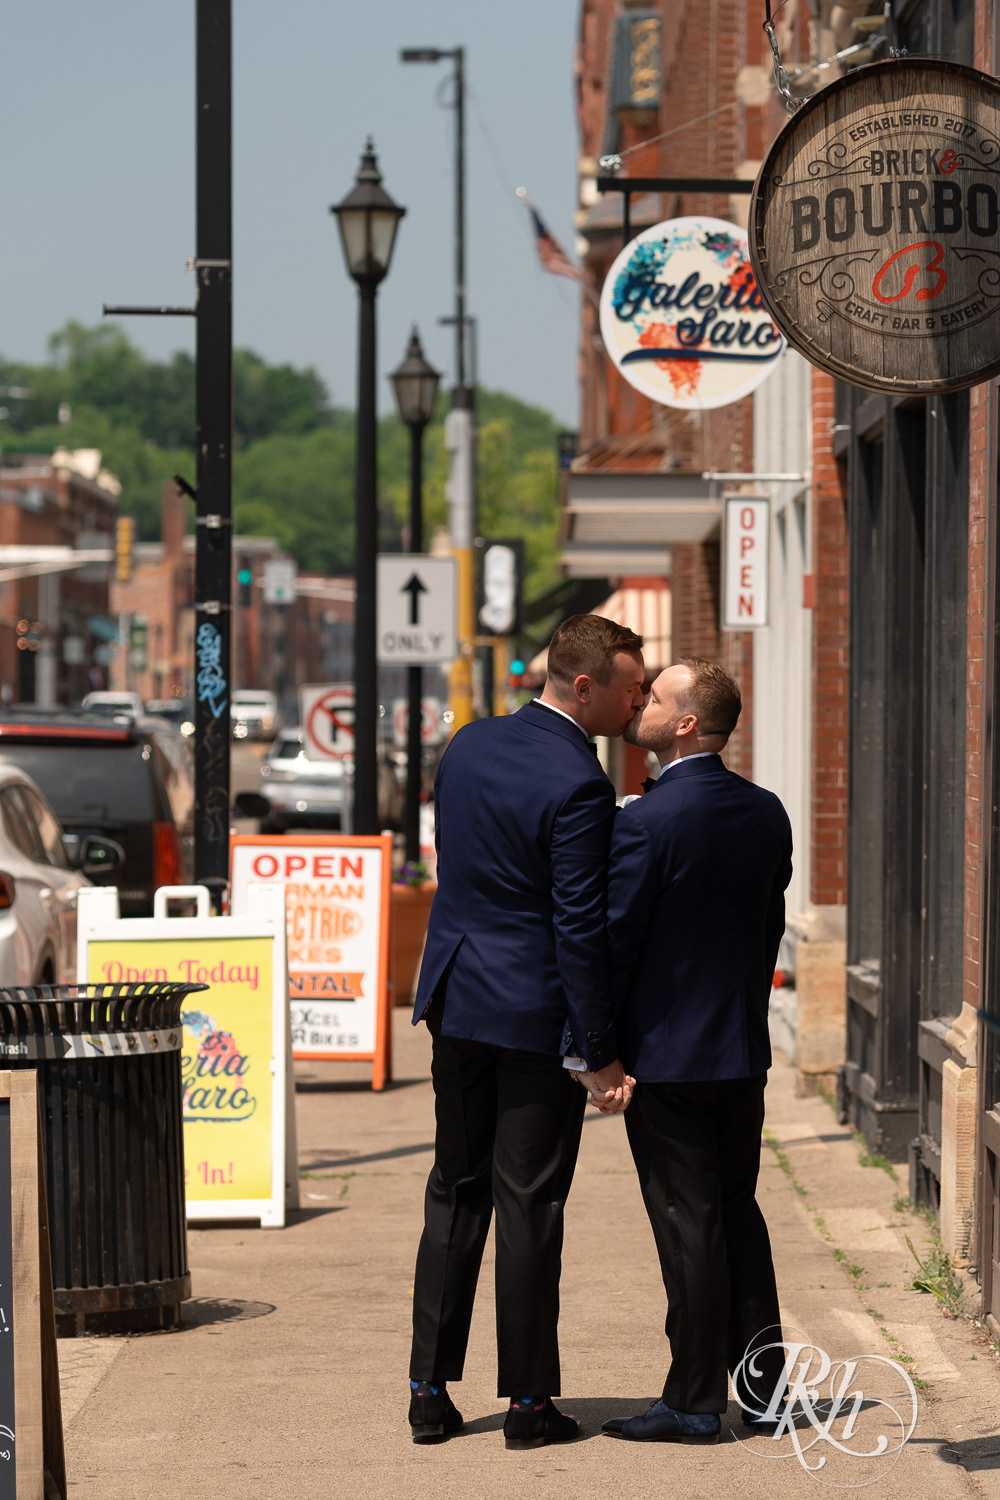 Grooms in blue suits kiss walking down the street before gay wedding in Stillwater, Minnesota.